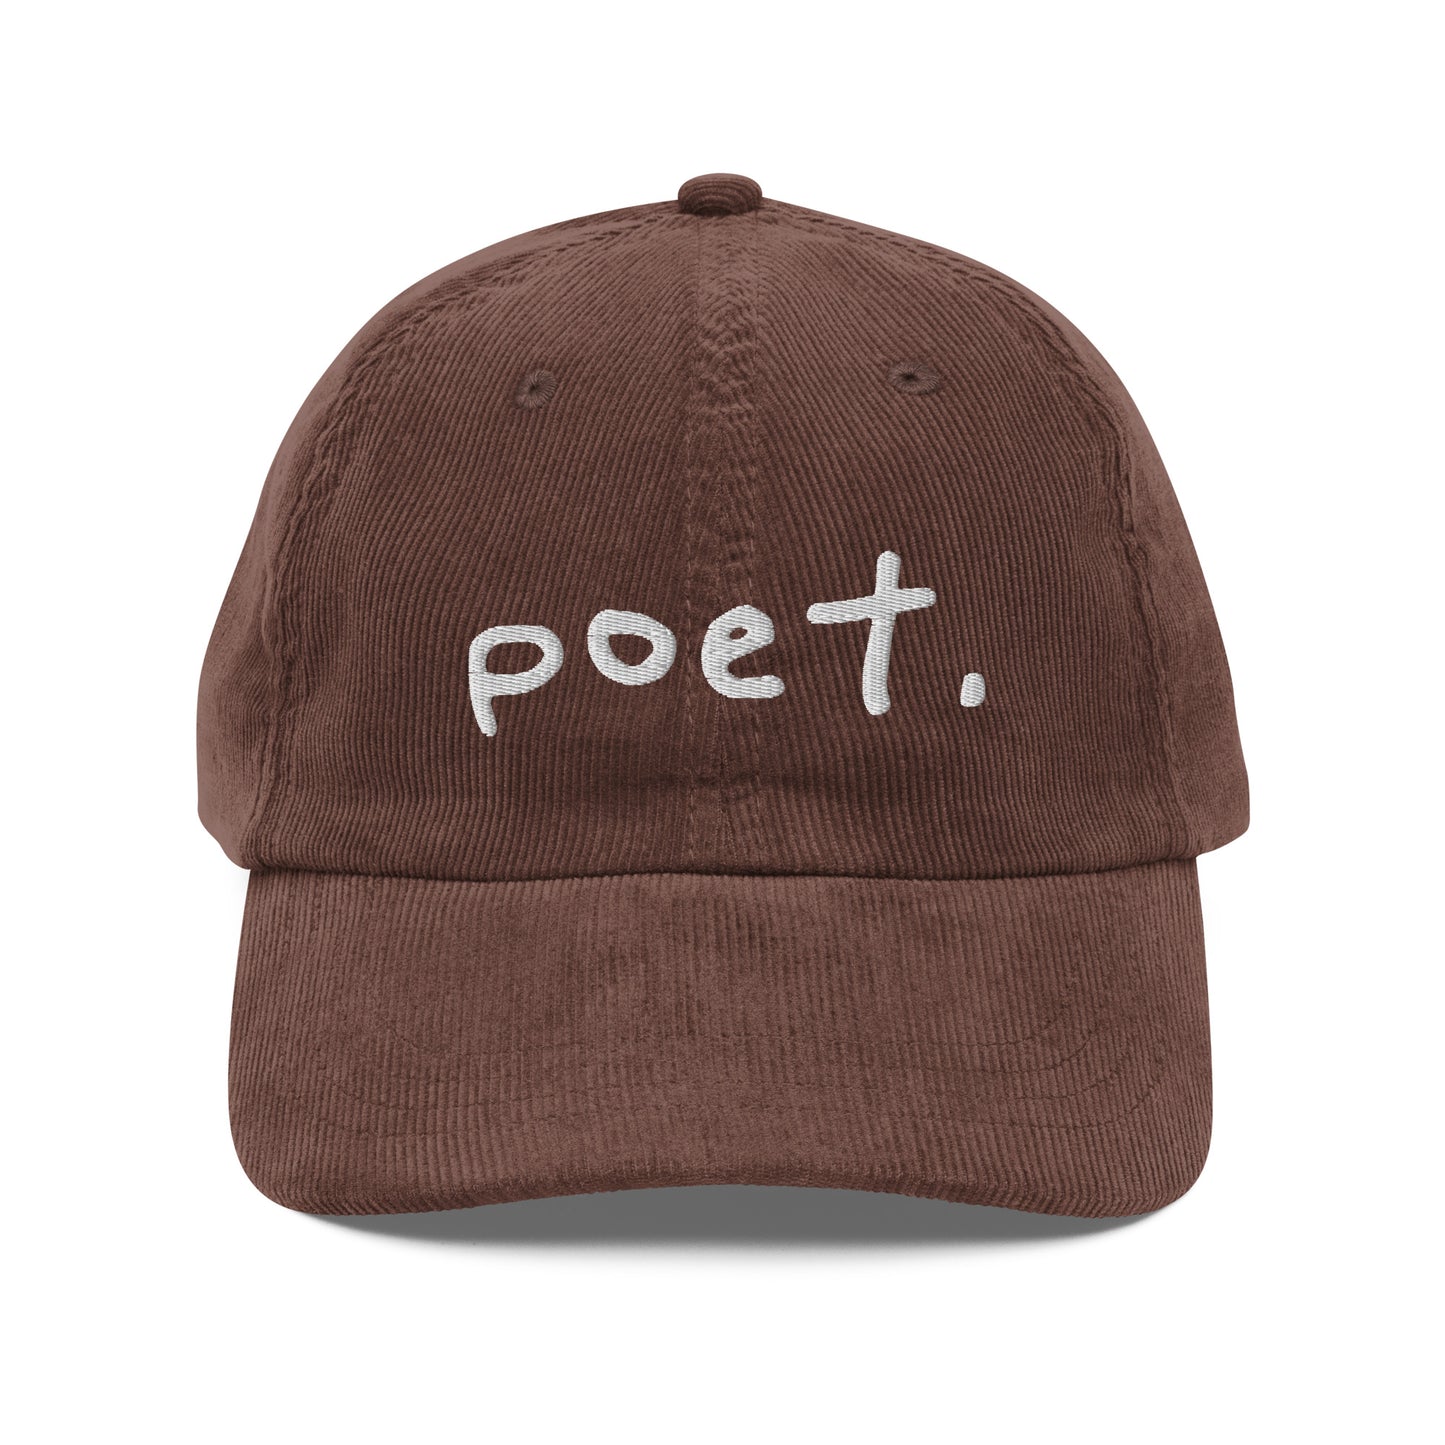 poet. vintage corduroy cap